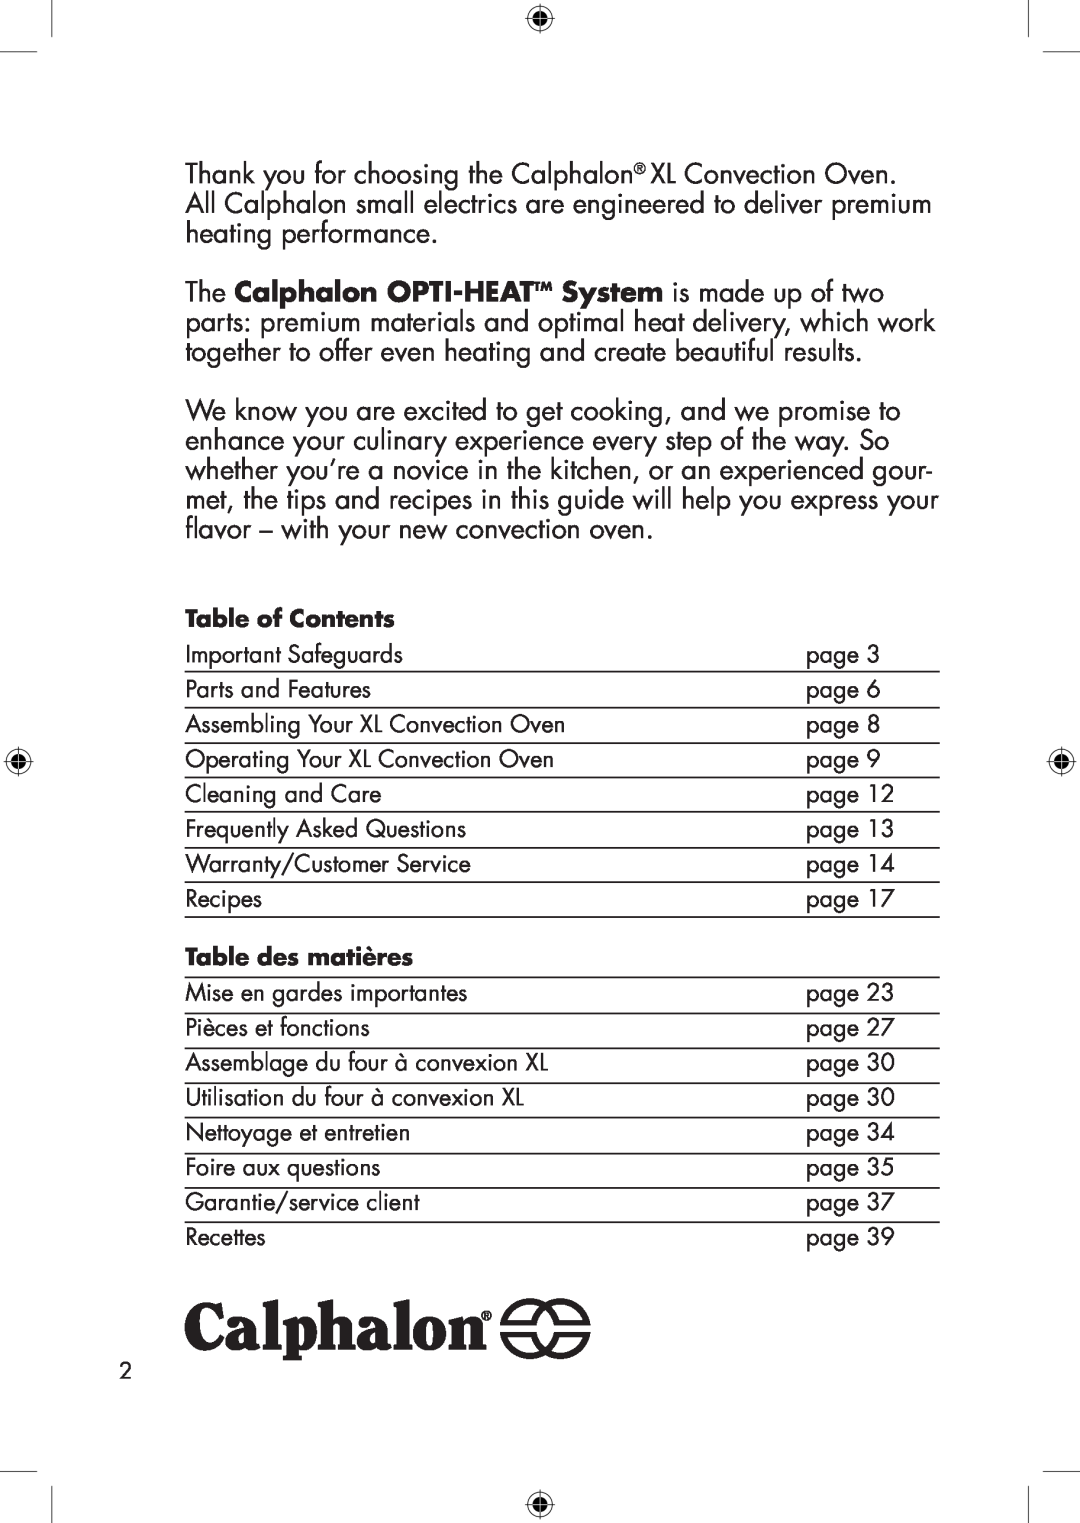 Calphalon he650co manual Table of Contents, Table des matières 